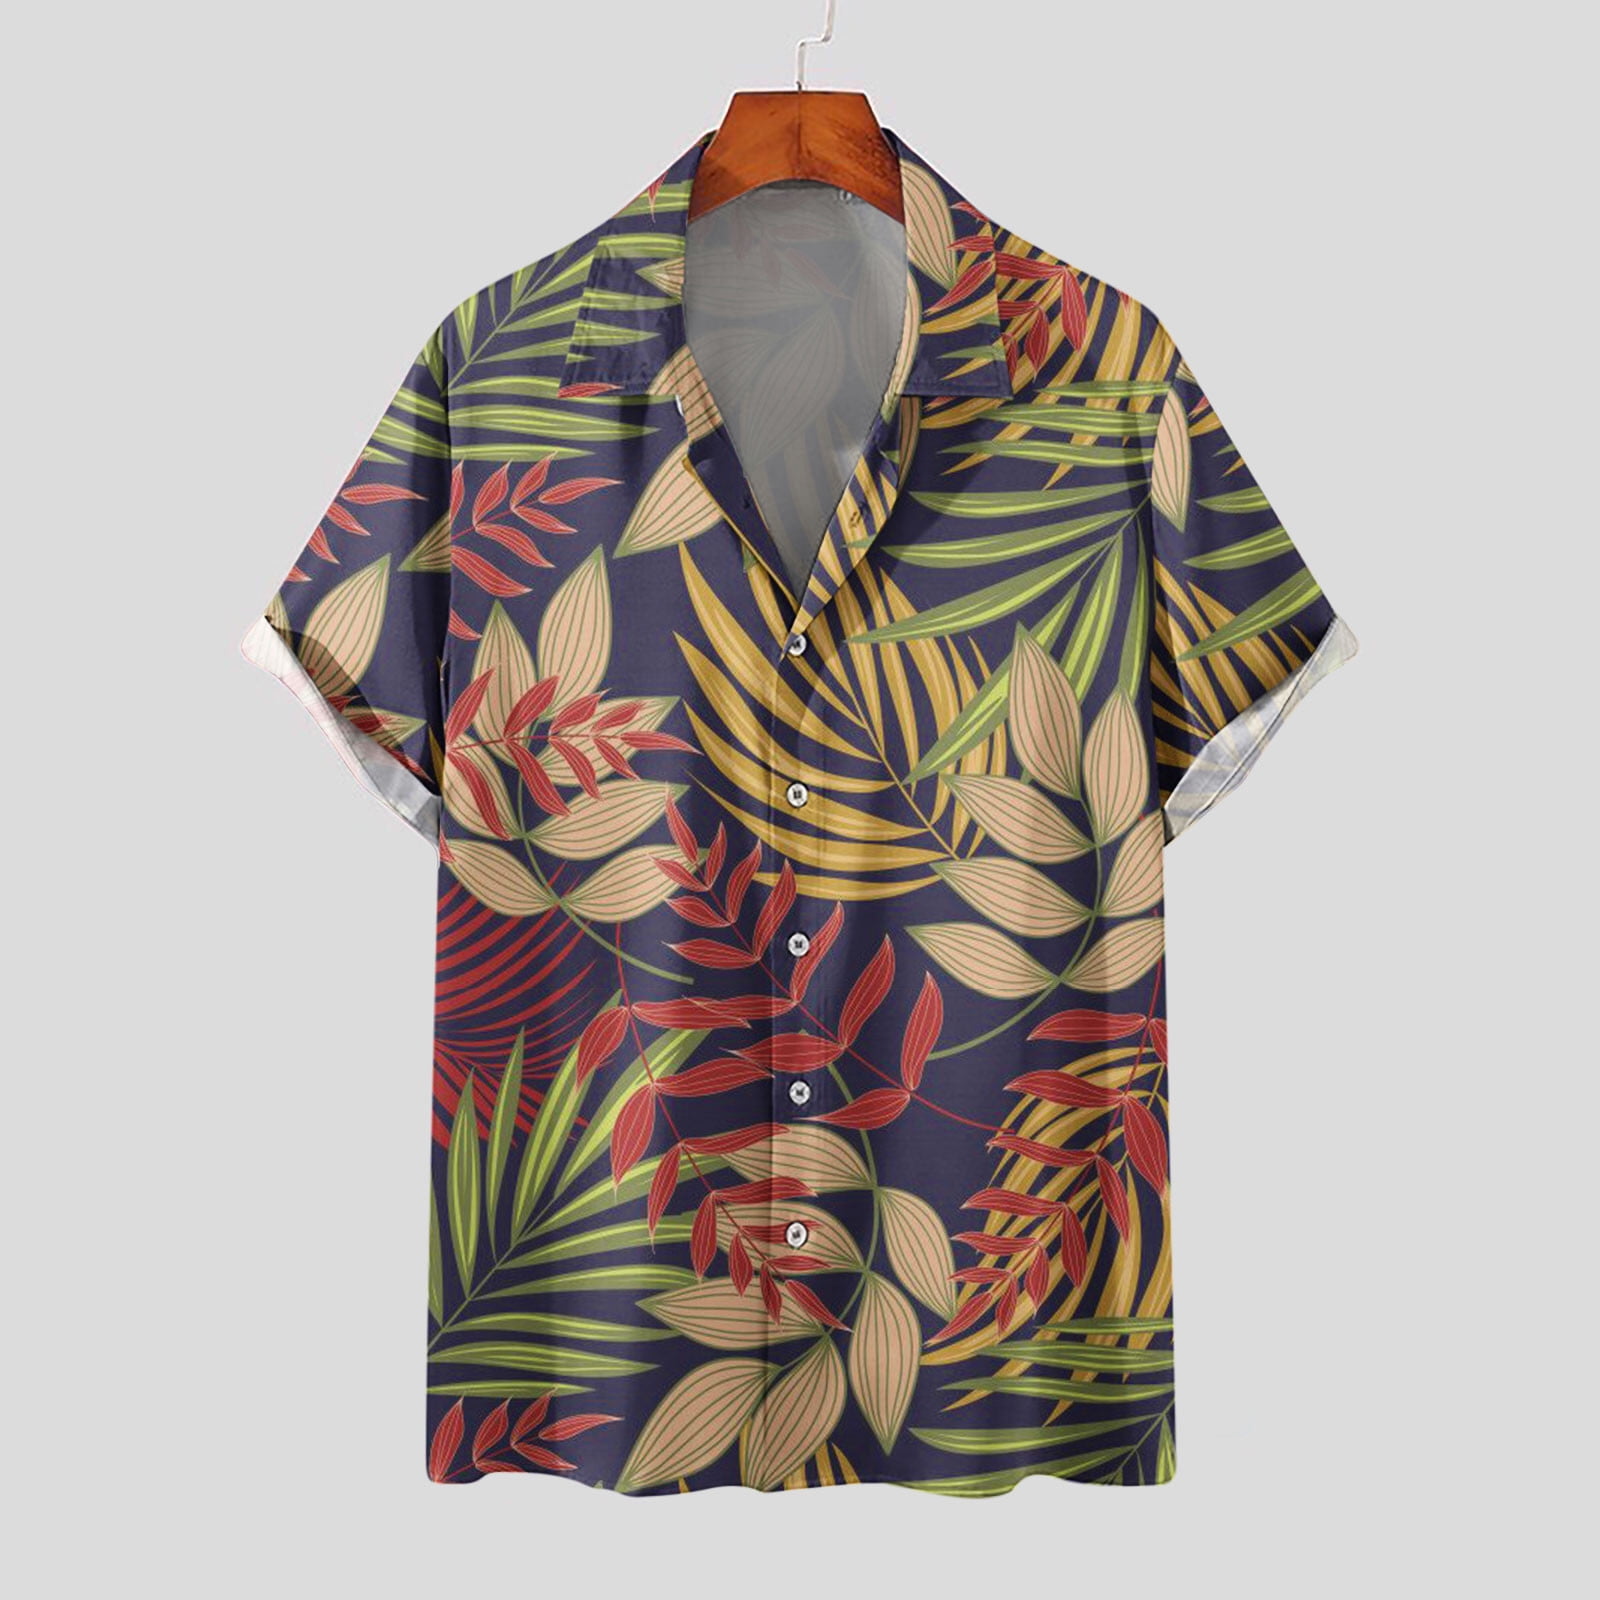 Xysaqa Men's Hawaiian Shirts Short Sleeve Casual Button-Down T Shirt Summer  Tropical Print Beach Party Holiday Top Tee (S-5XL Big & Tall)